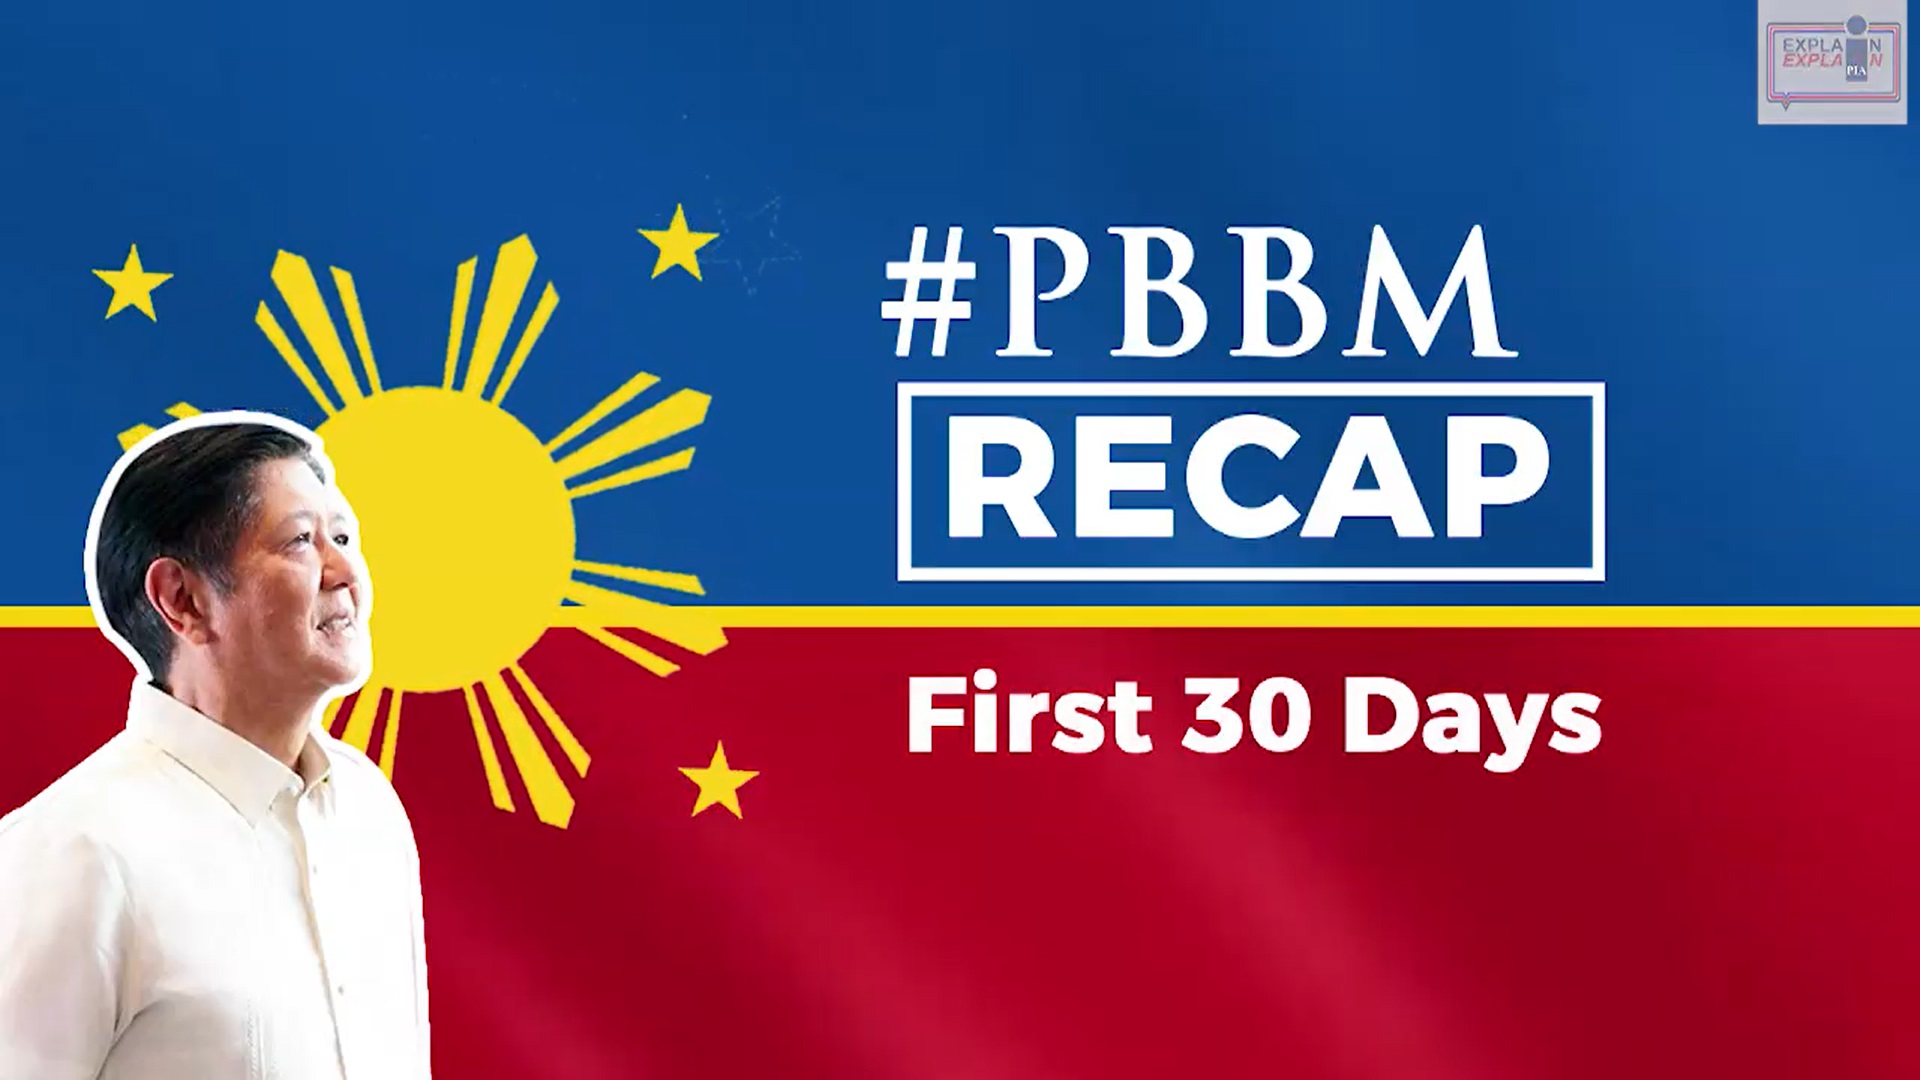 PBBM RECAP: FIRST 30 DAYS